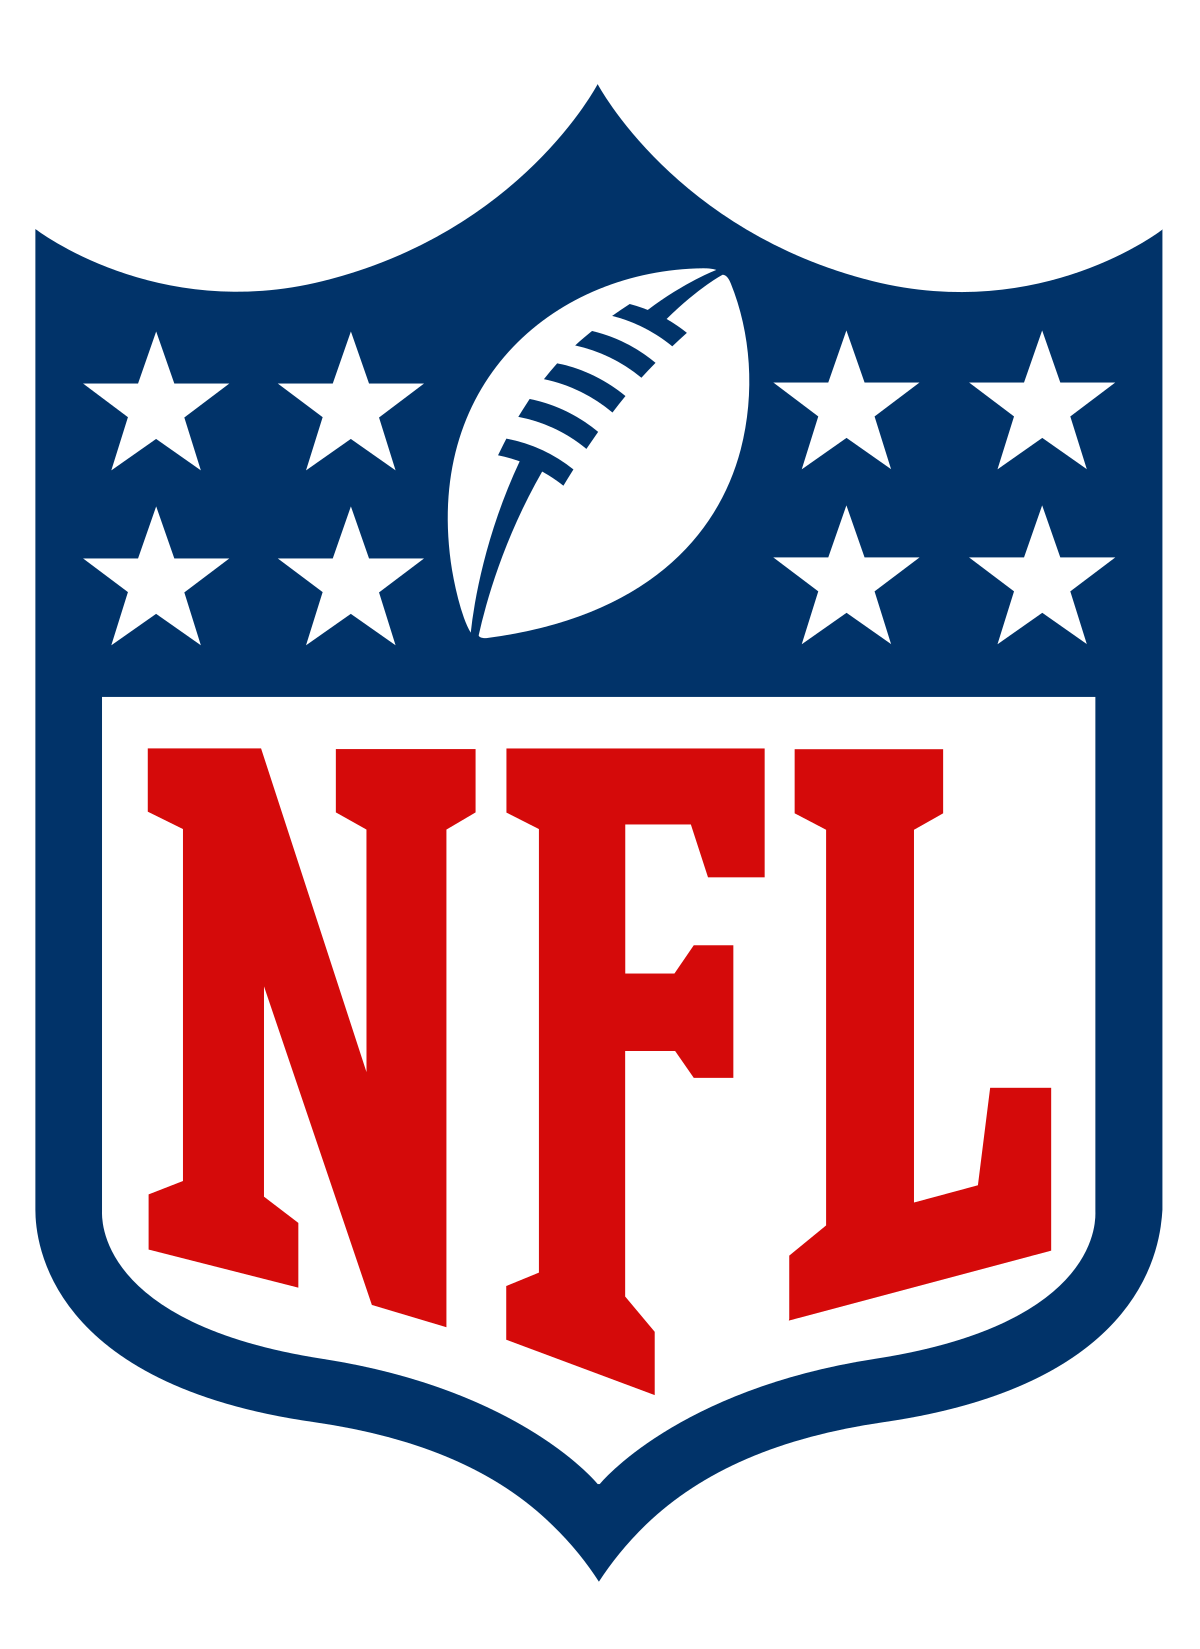 NFL logo - National Football League emblem representing the premier American football league.